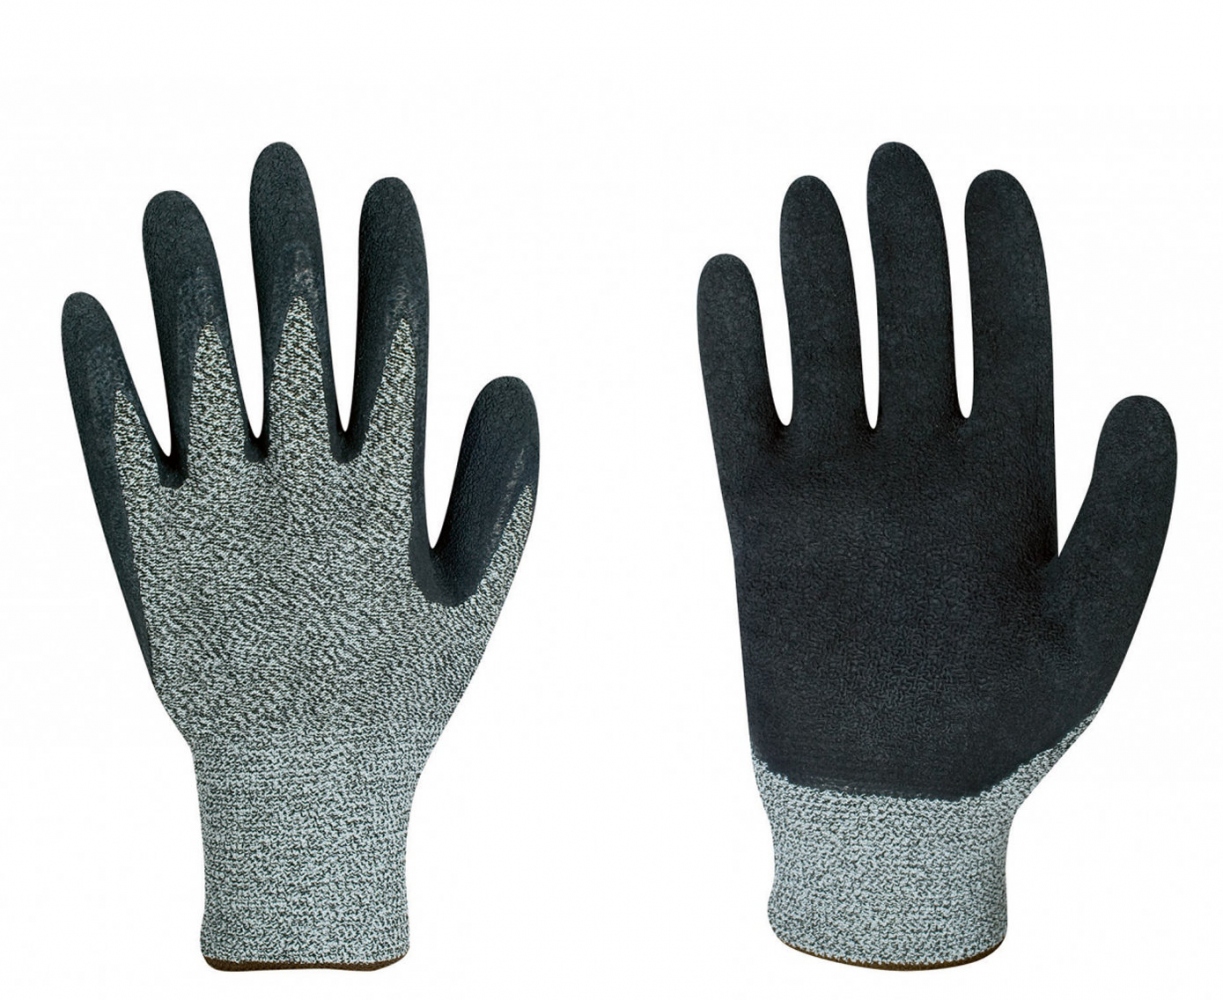 pics/Feldtmann 2016/Handschutz/google/stronghand-0830-dayton-cut-resistant-safety-gloves2.jpg